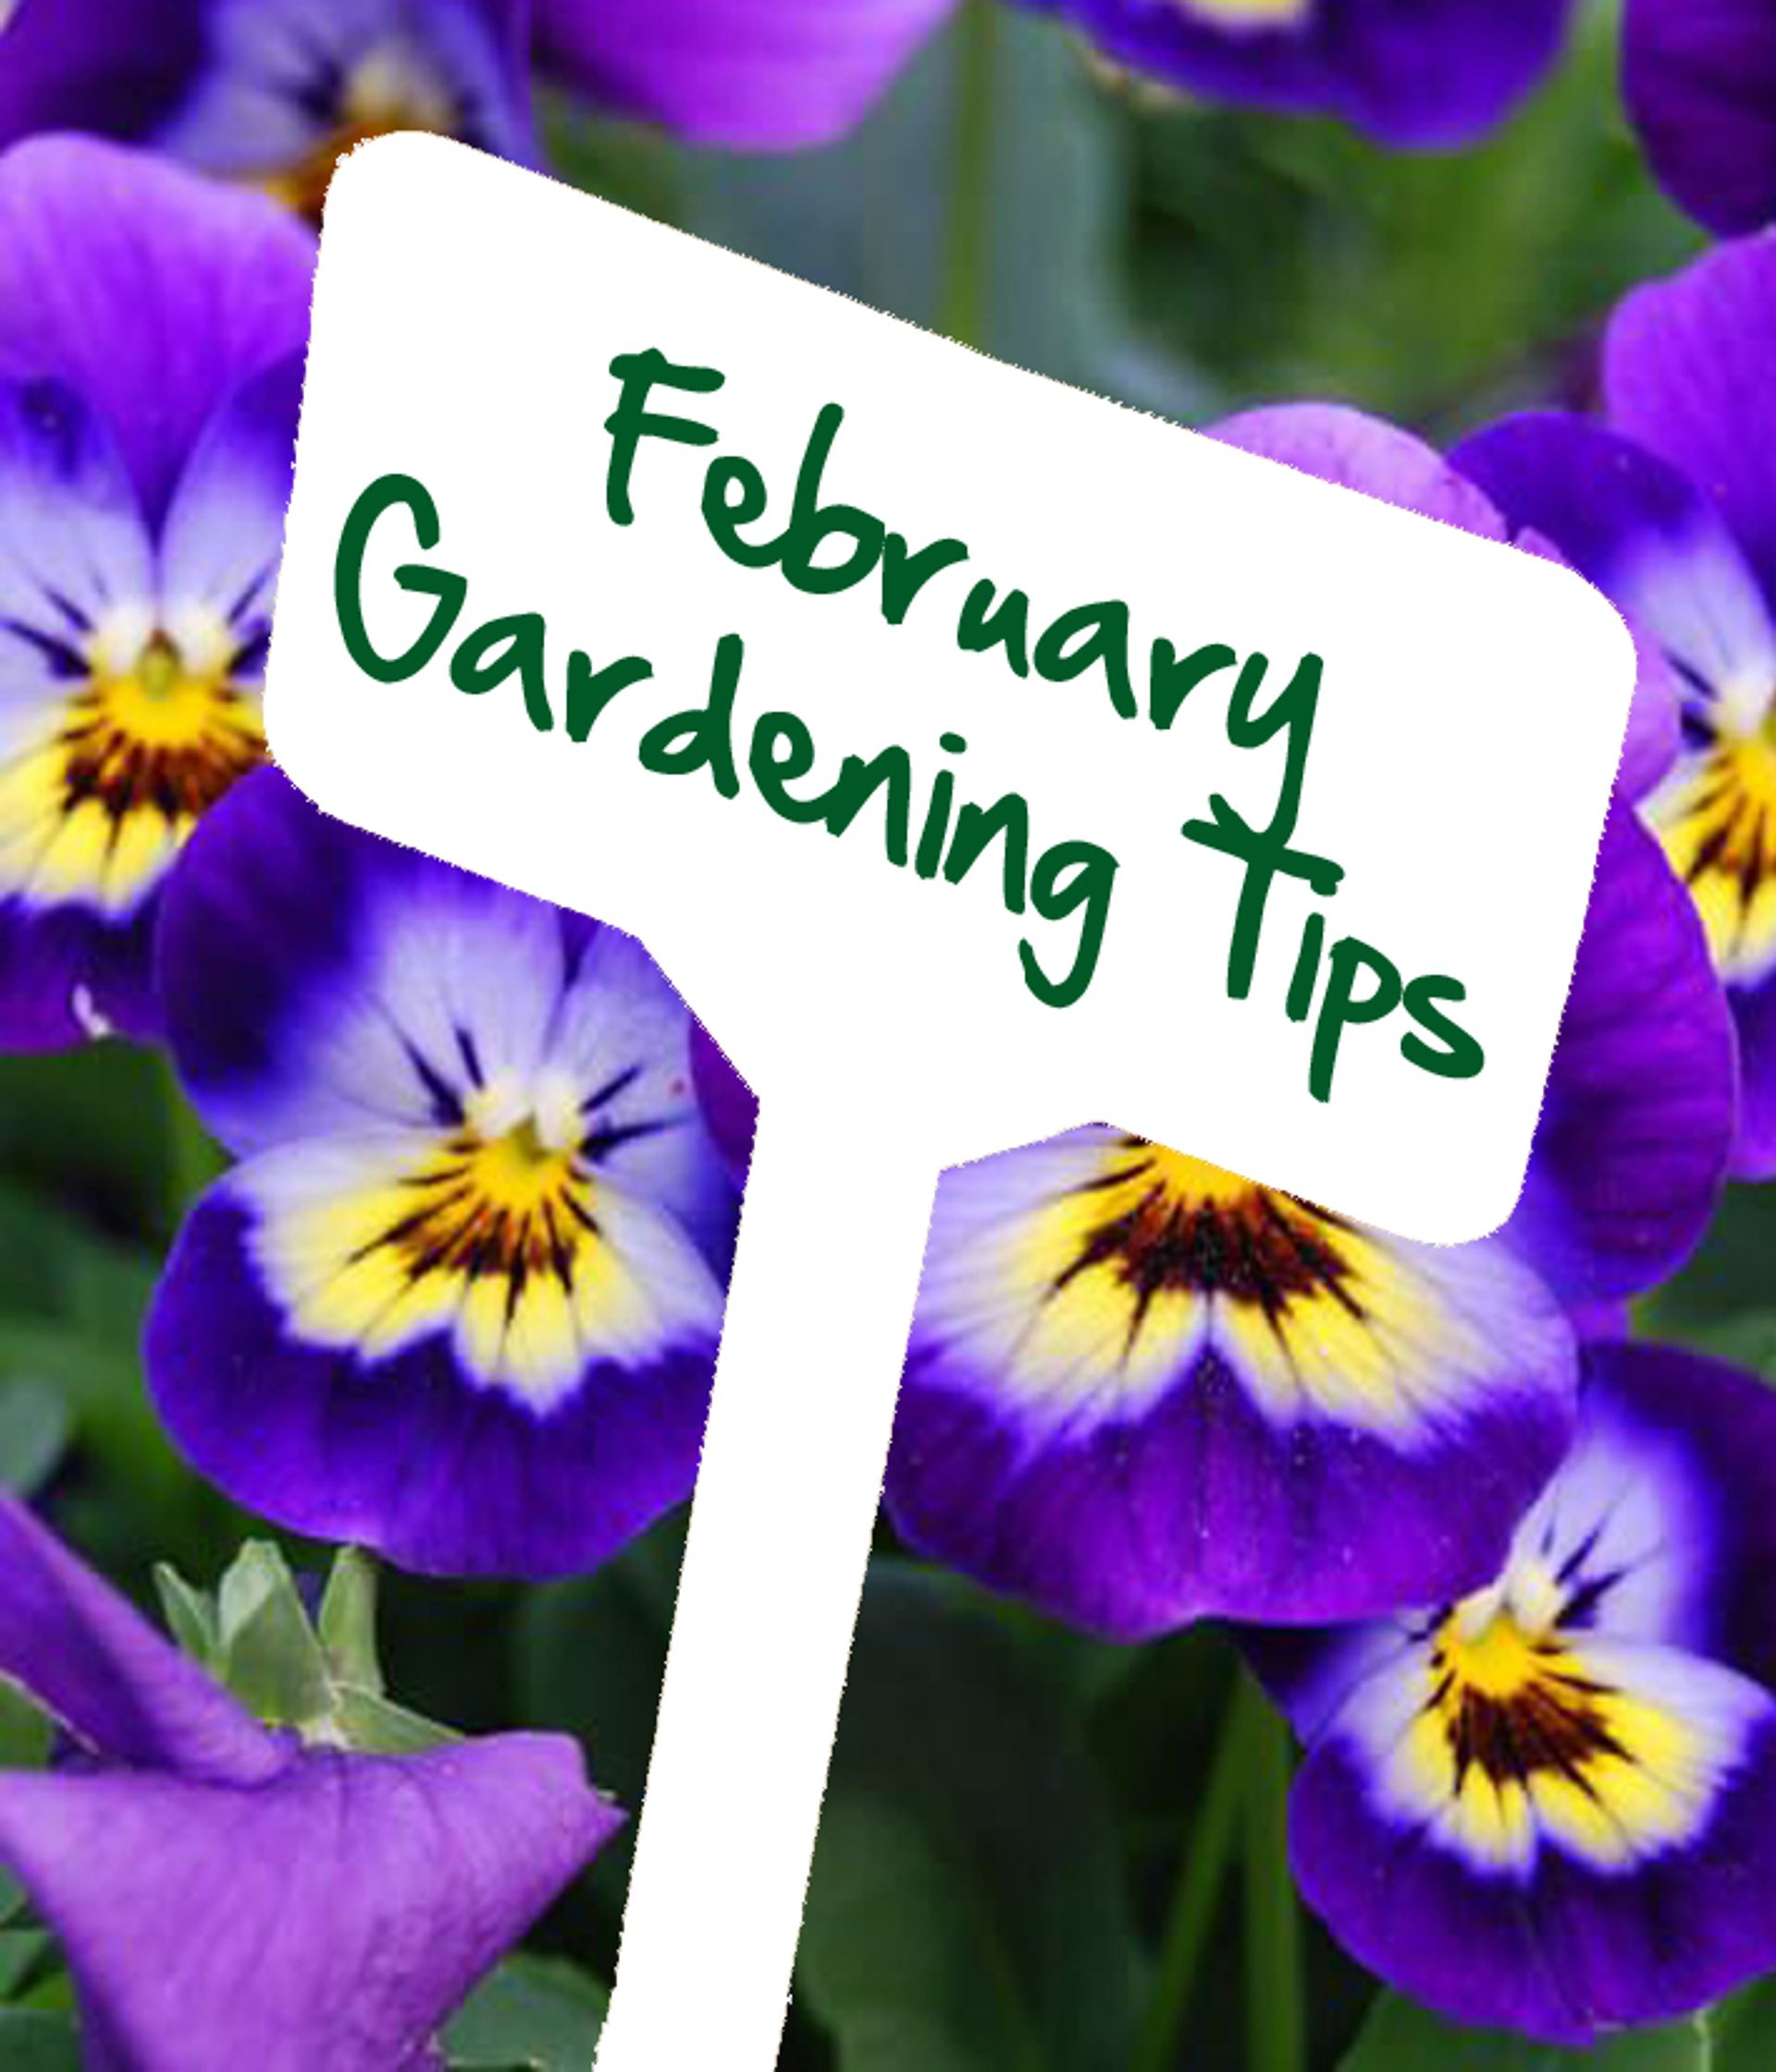 February gardening tips by Reg Moule